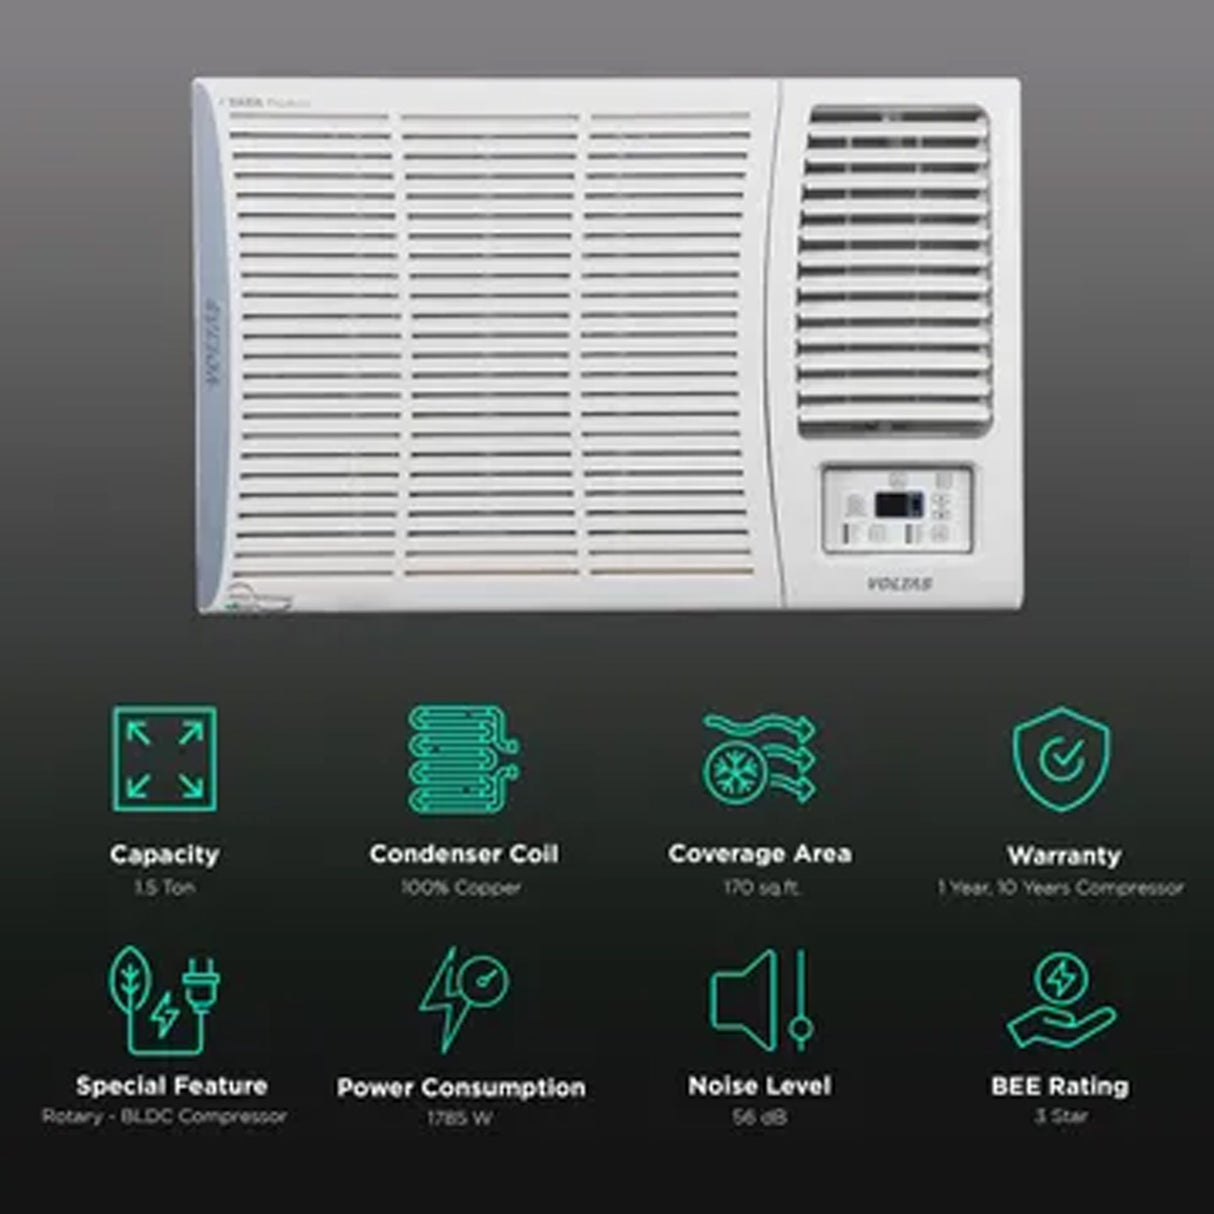 Best Air Conditioner: Voltas 1.5 Ton Window AC - Inverter, 183V Vertis Elite